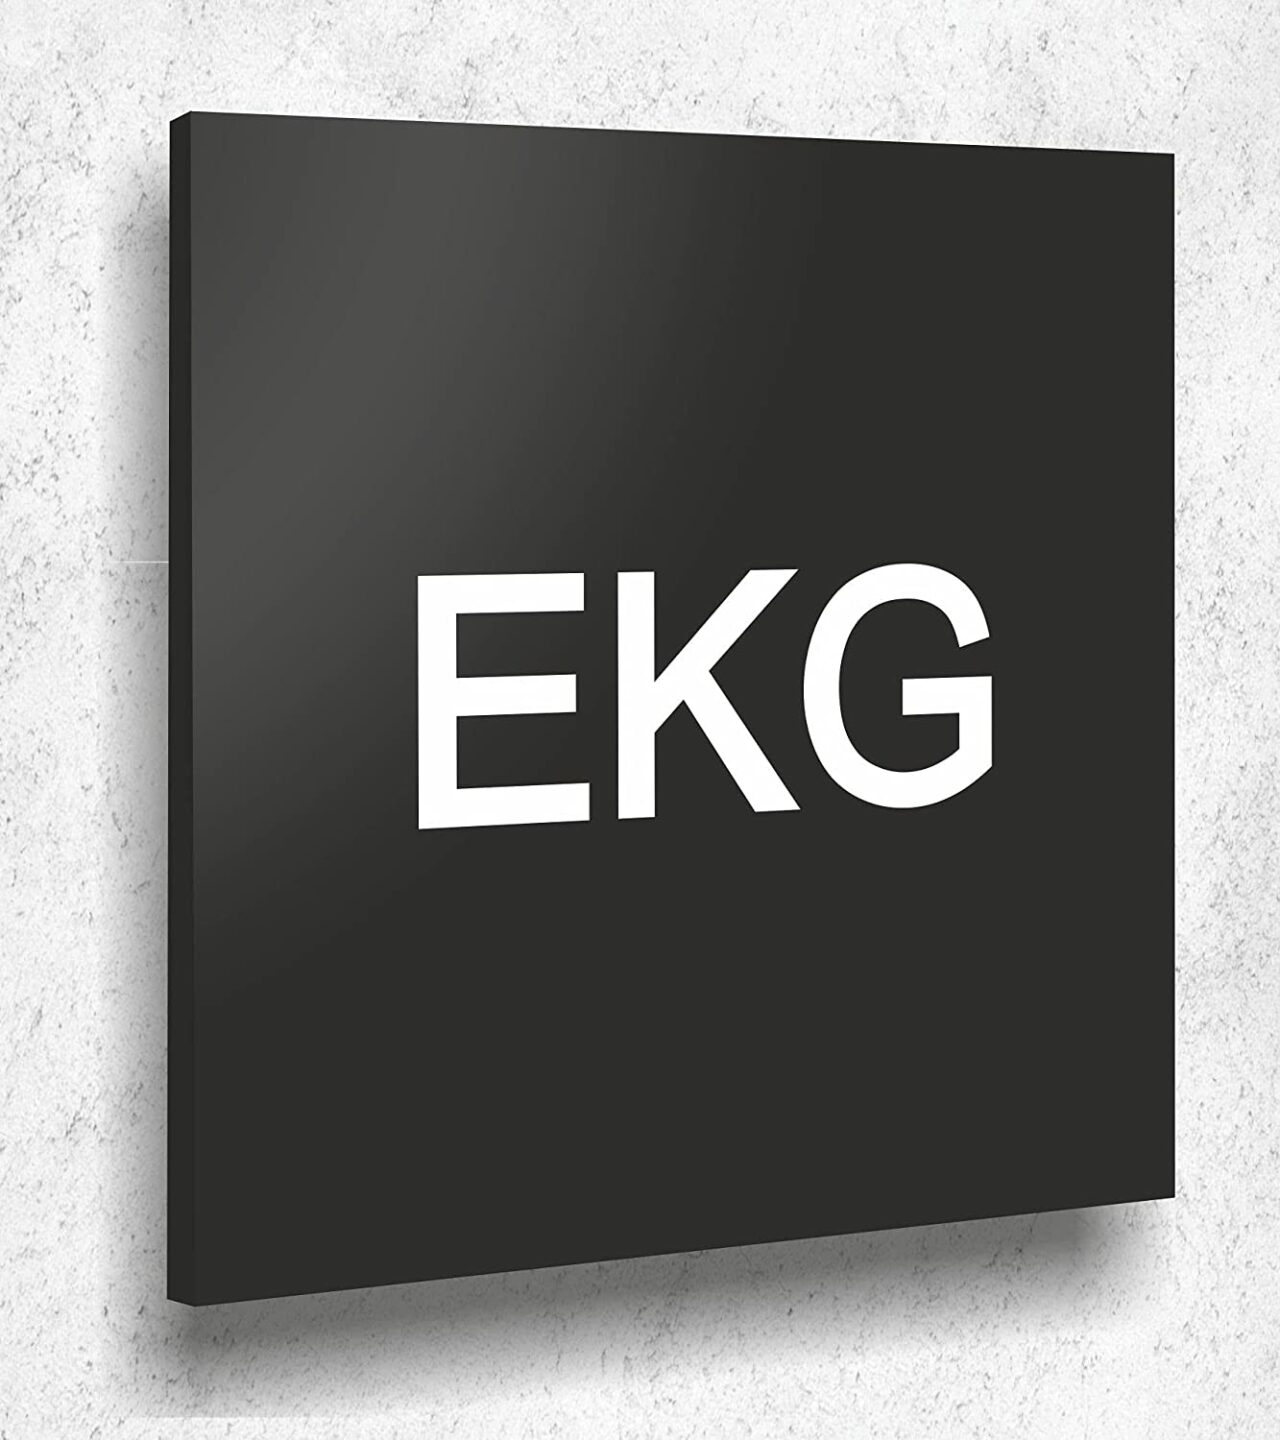 Türschild EKG Schild Schwarz Matt UV Druck 12 x 12cm - 3mm Acrylglas - Made in Germany Art.Nr. A 2045